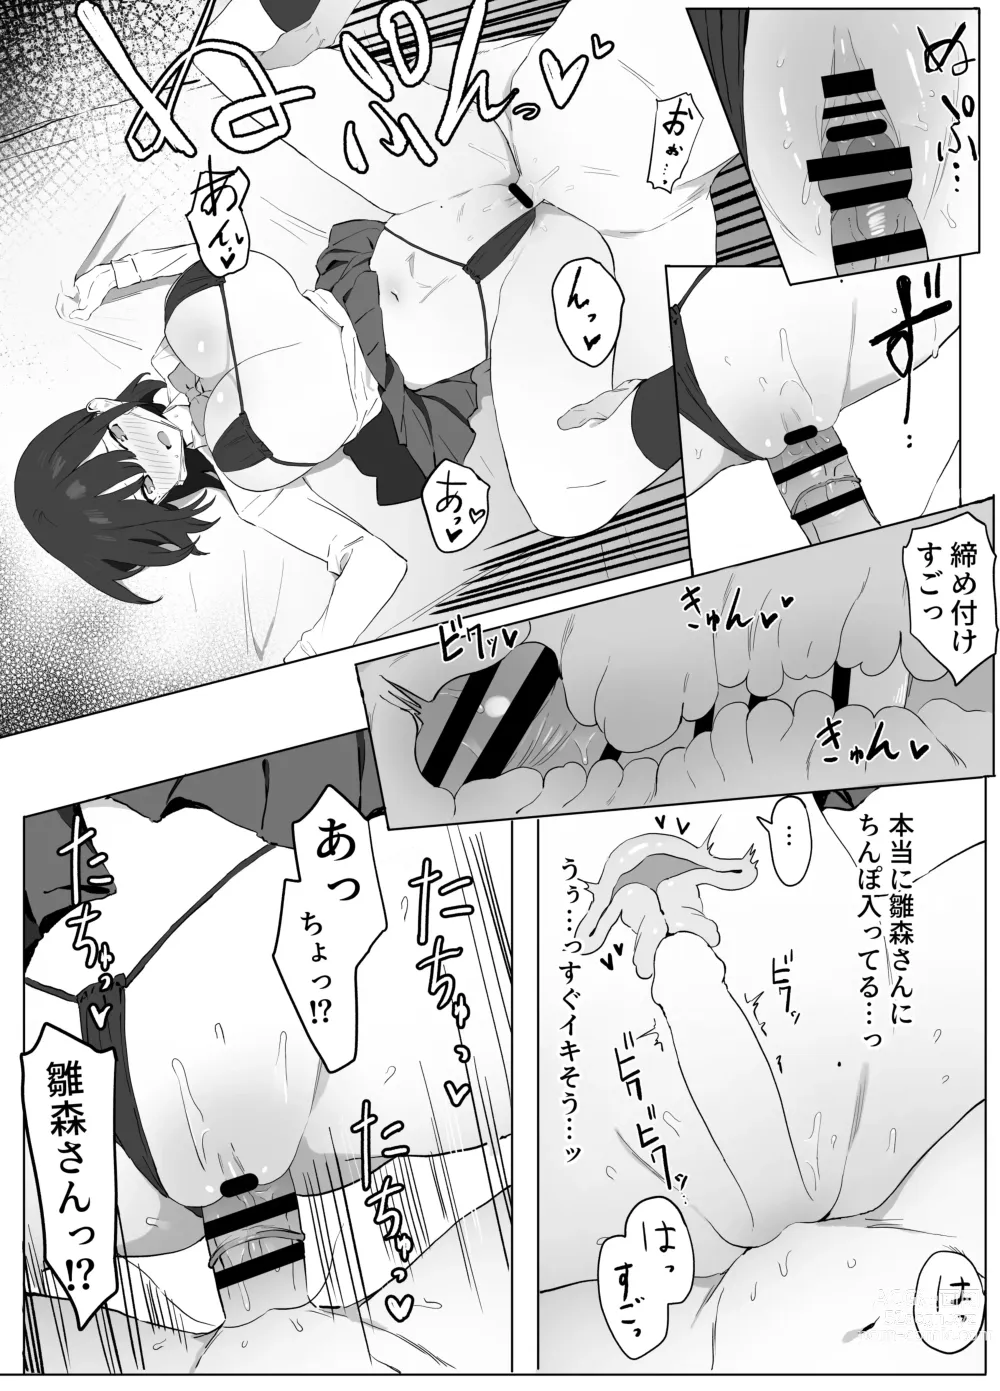 Page 21 of doujinshi Seikoui Jisshuu!